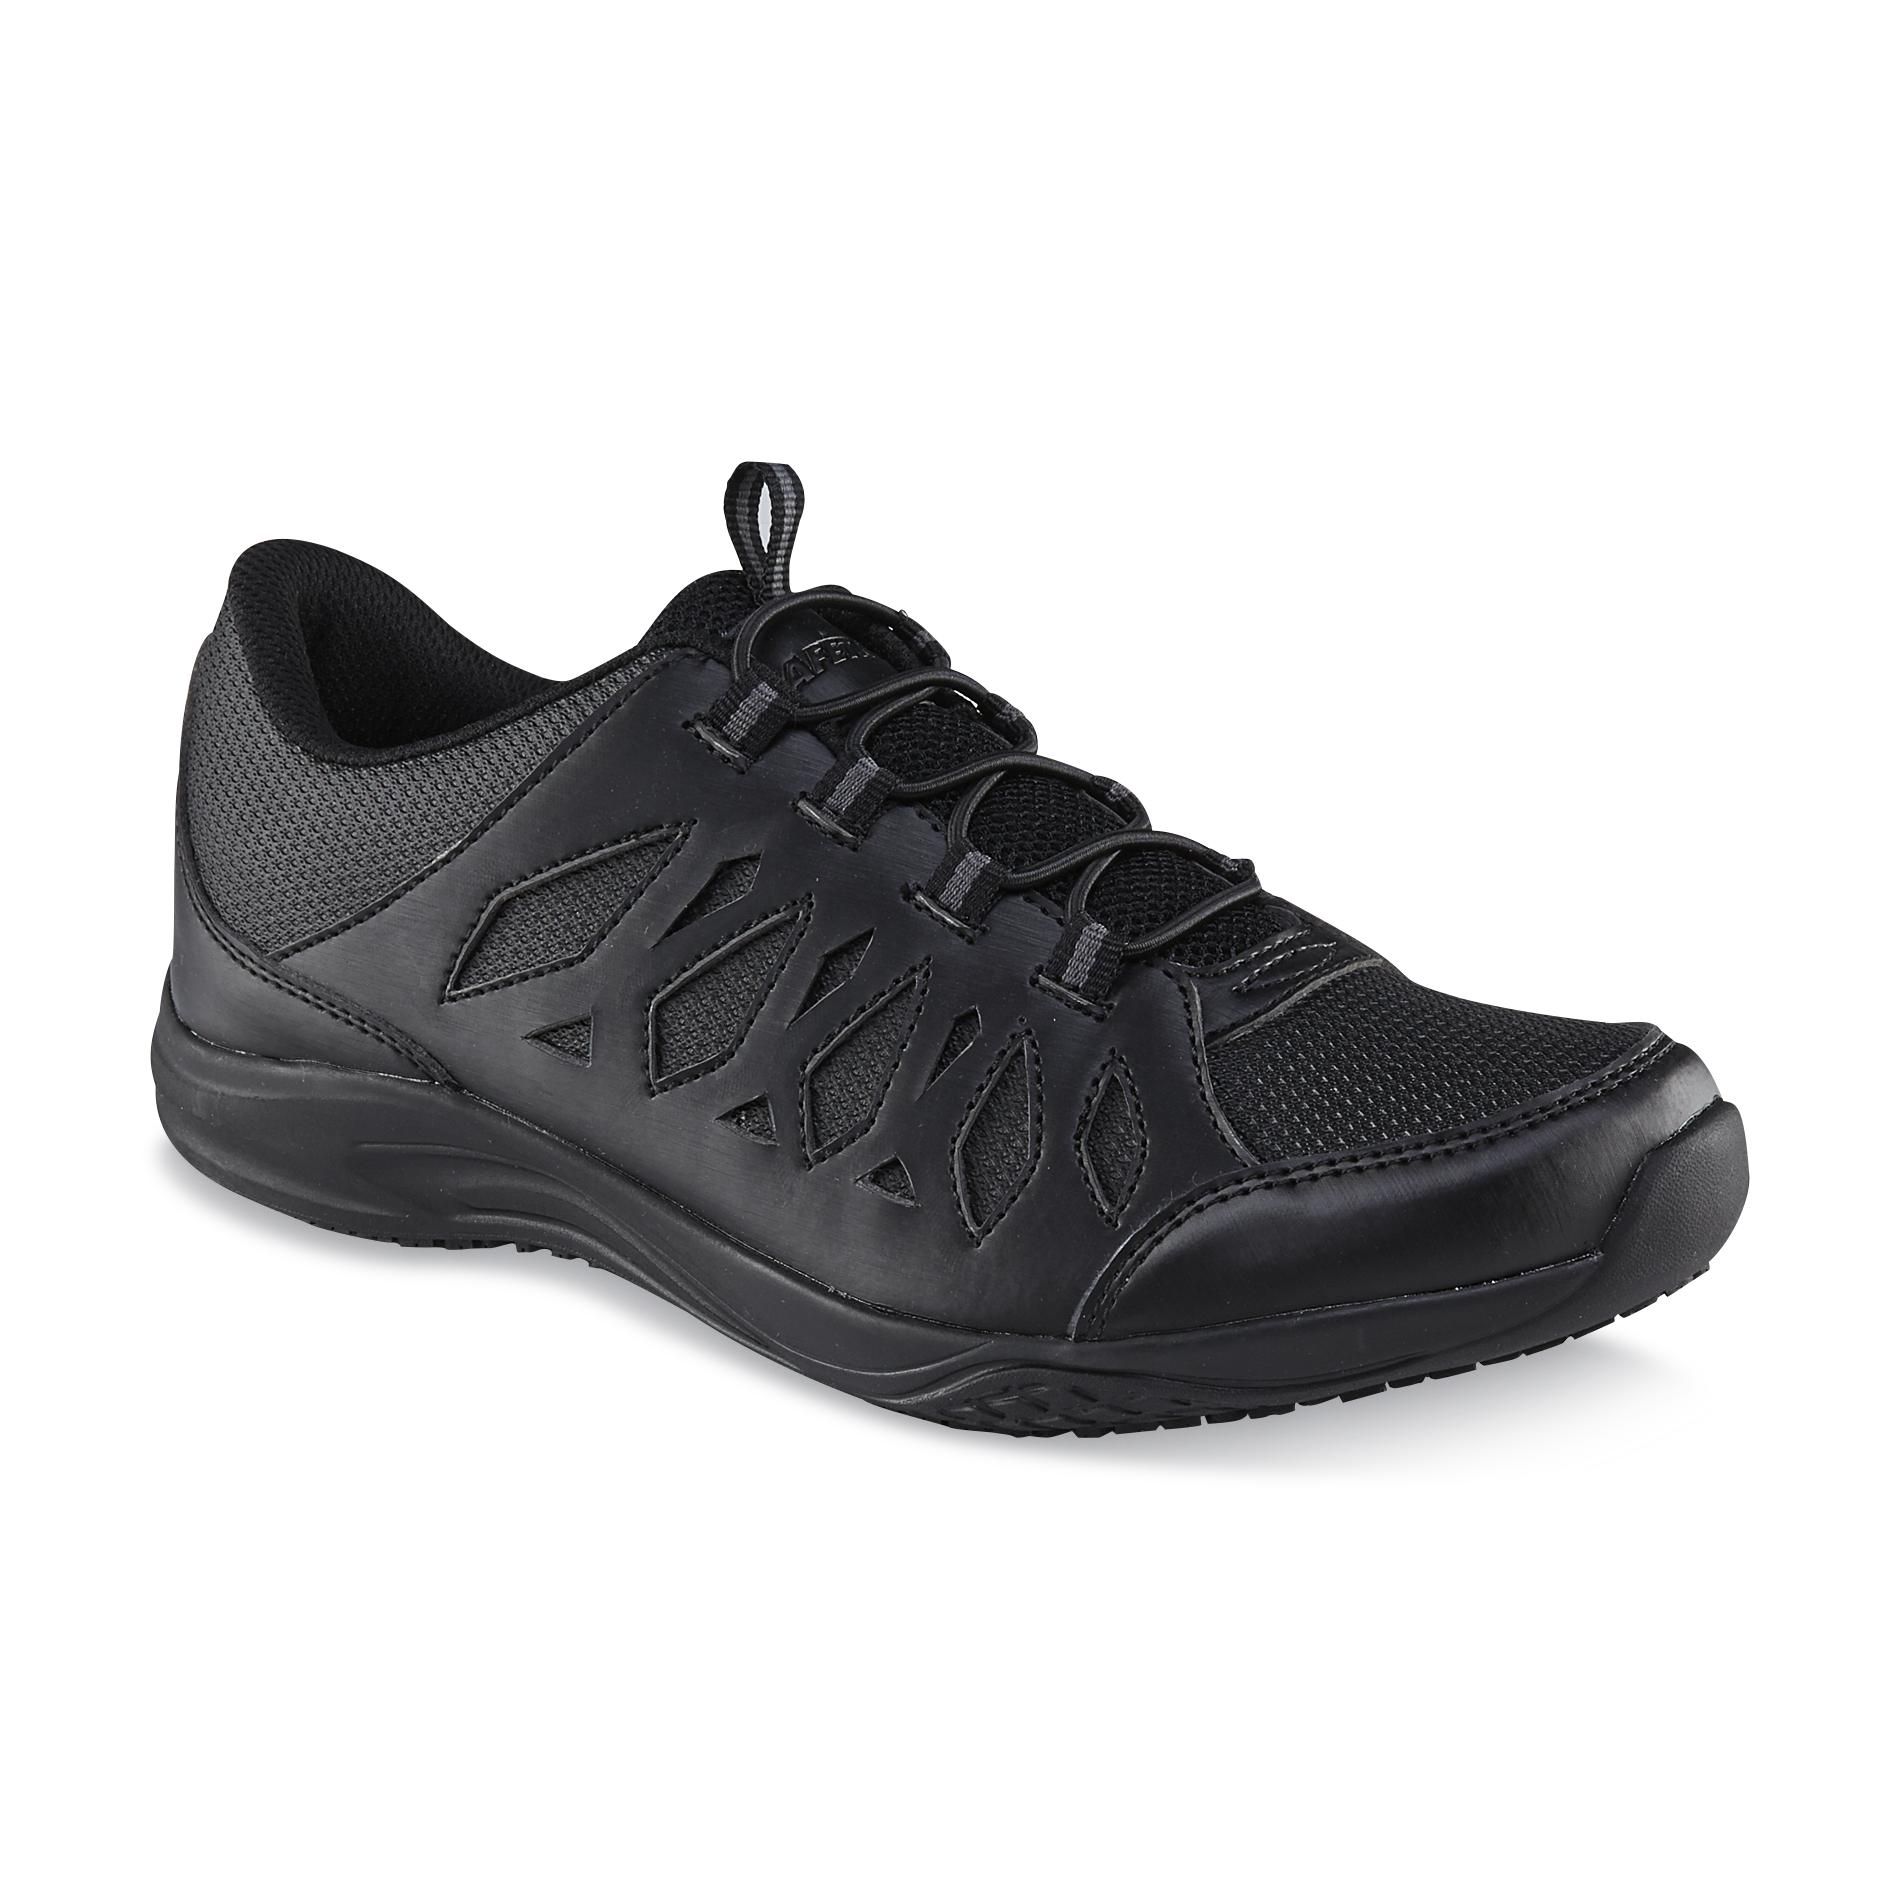 Brenna Slip Reisistant Work Shoe - Black